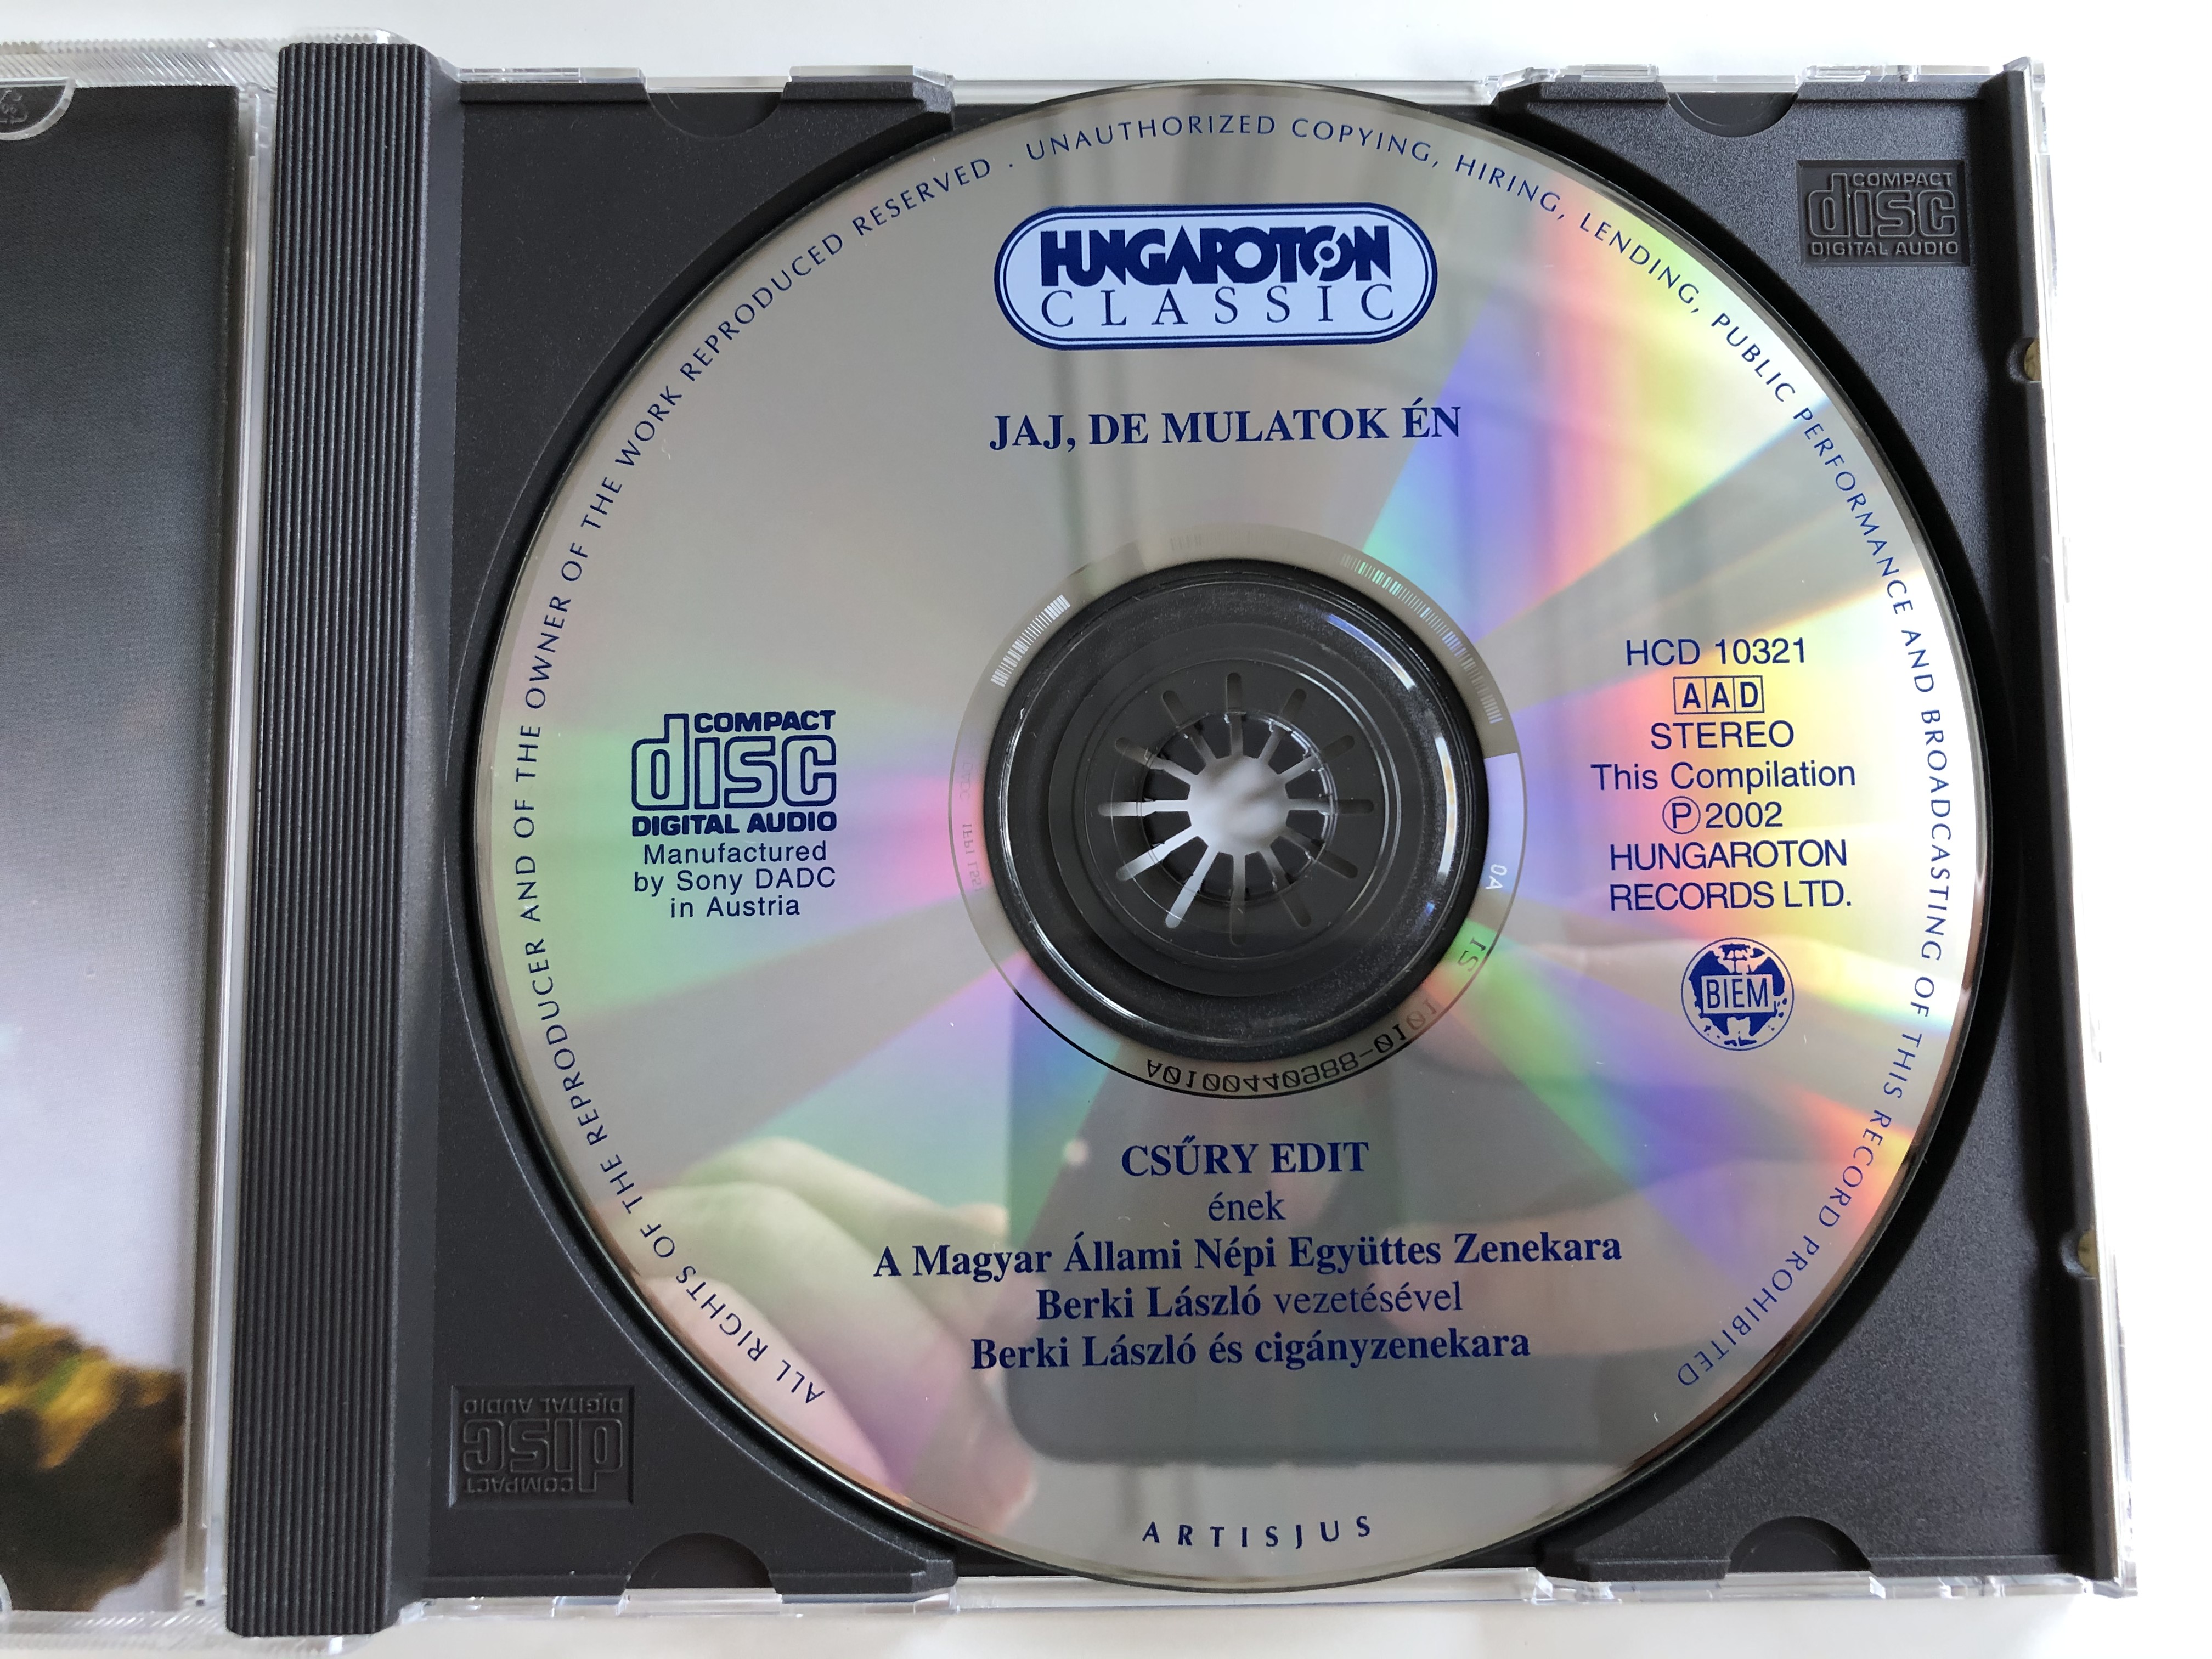 jaj-de-mulatok-n-cs-ry-edit-ciganydalok-hungaroton-classic-audio-cd-2002-stereo-hcd-10321-4-.jpg